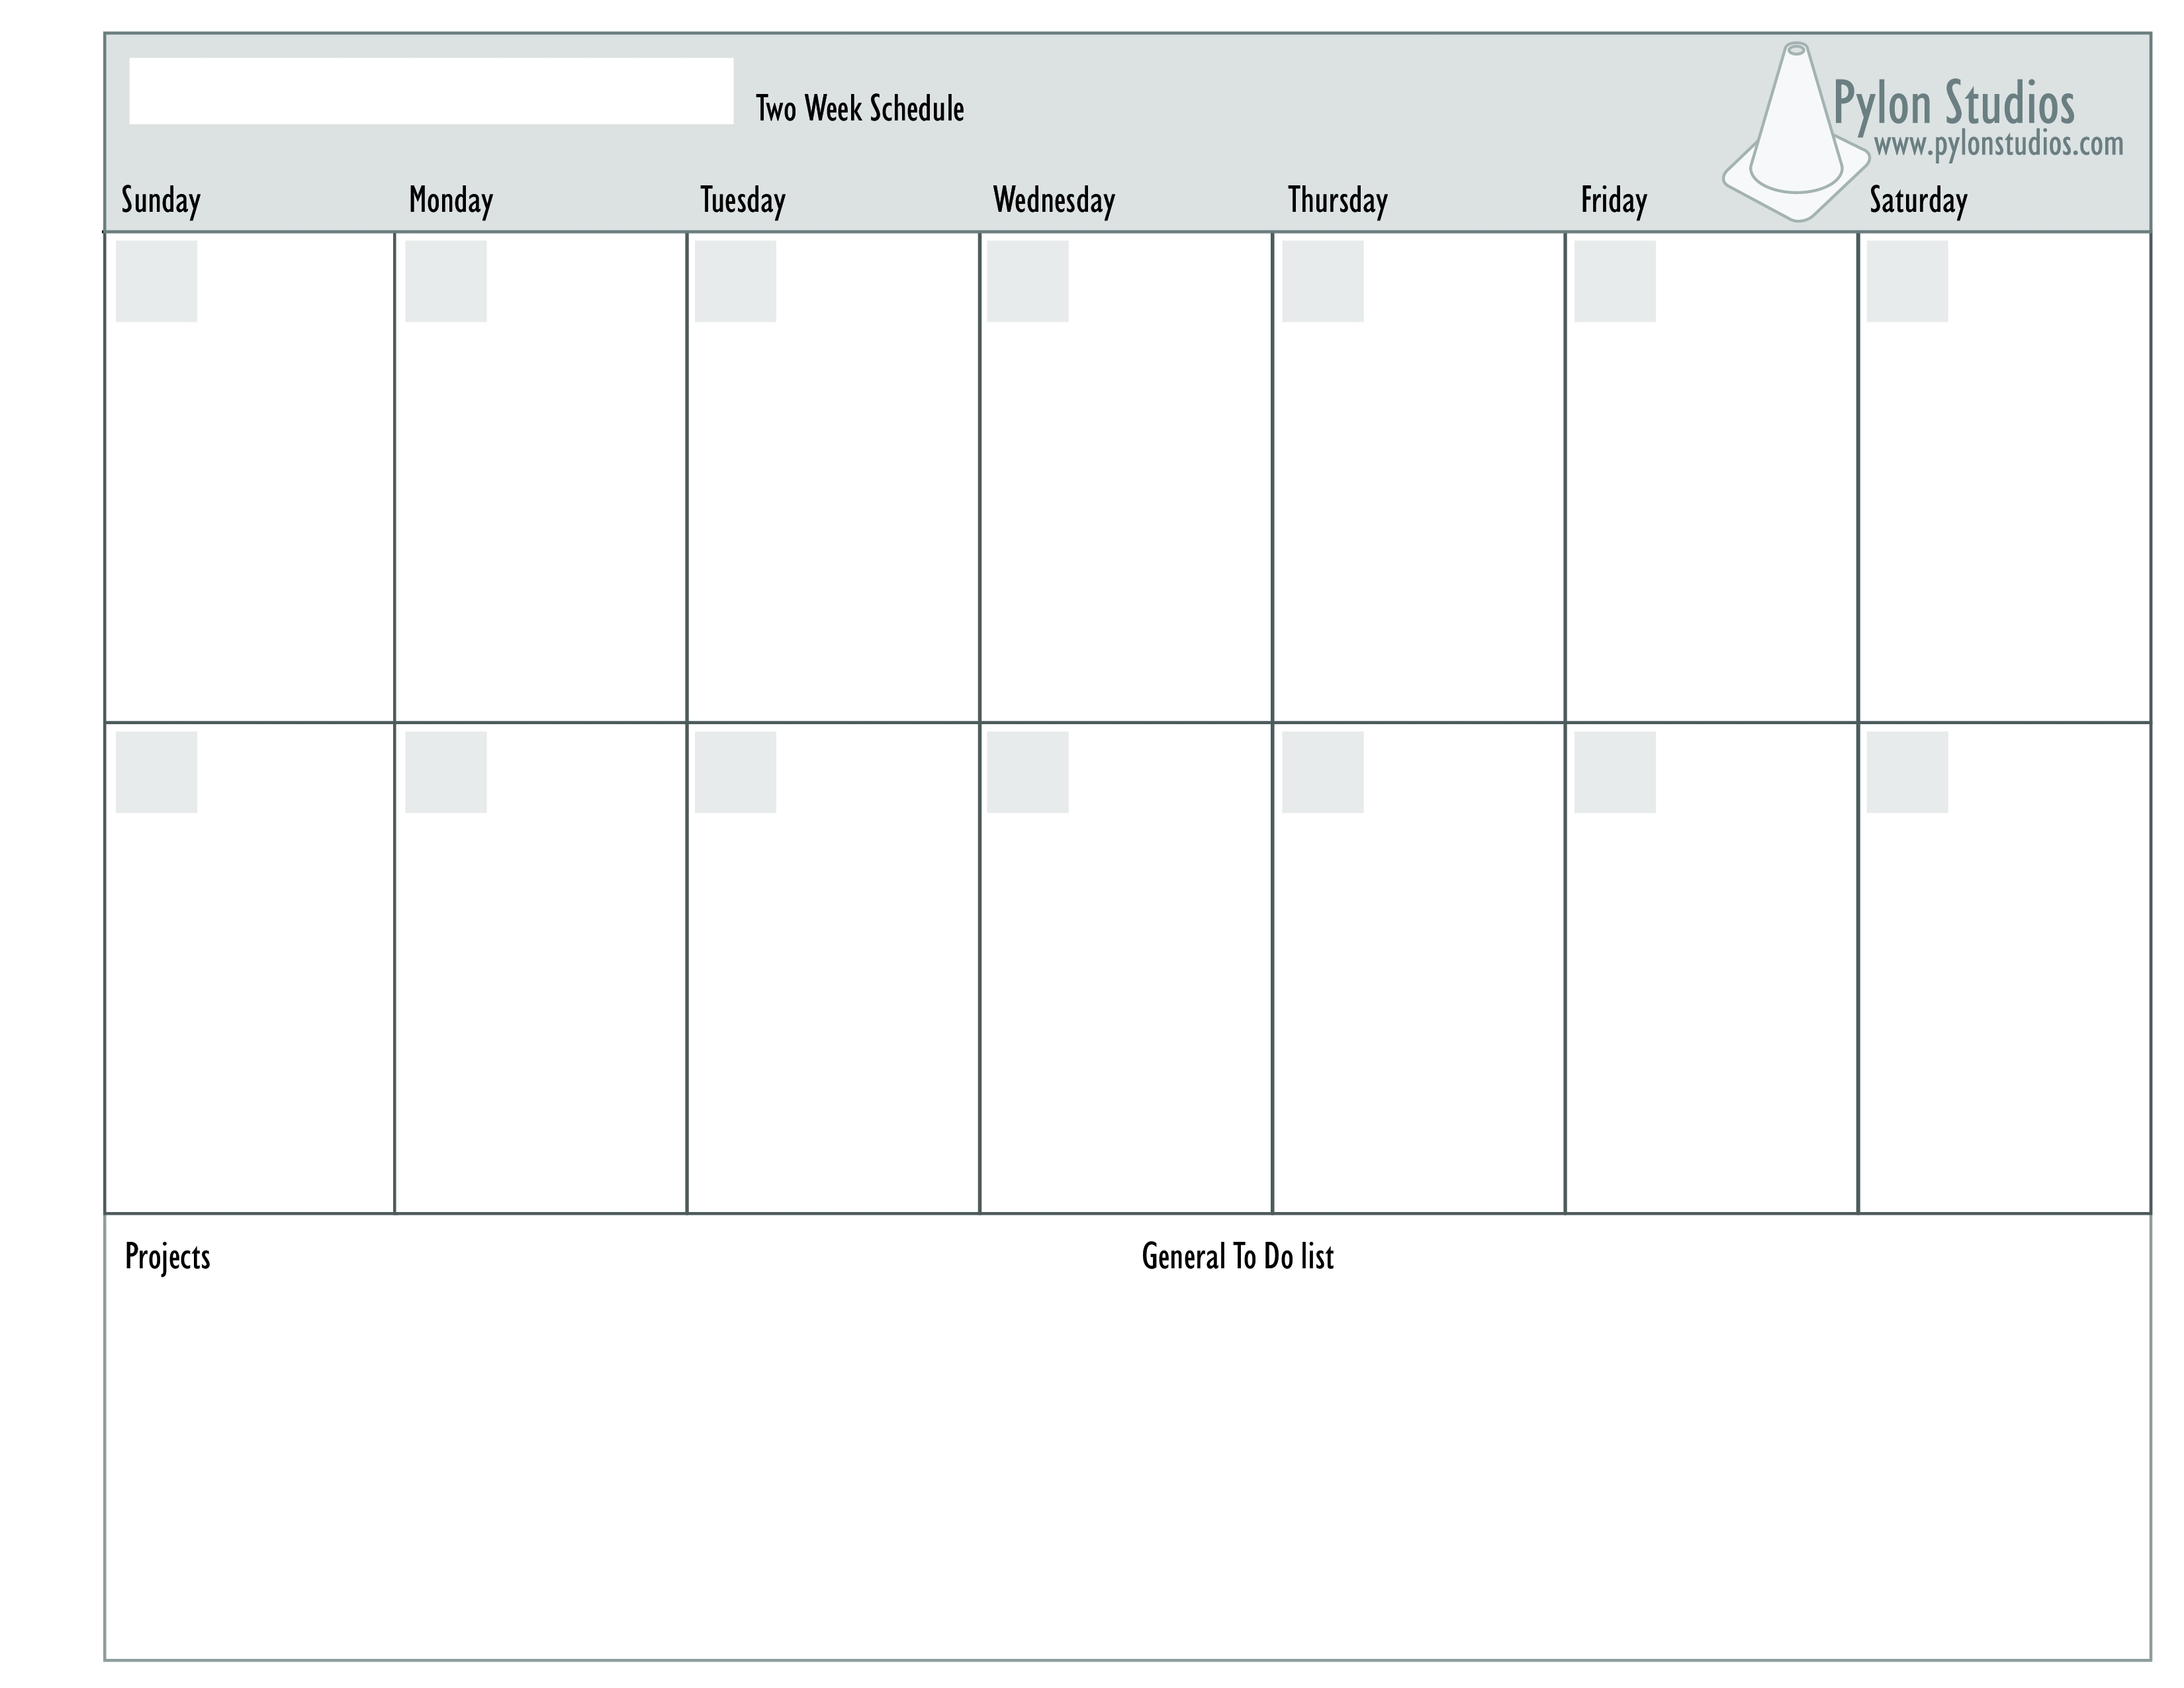 Two Week Schedule Template Calendar E2 80 93 Weekly For Word Free regarding Blank Two Week Schedule Template